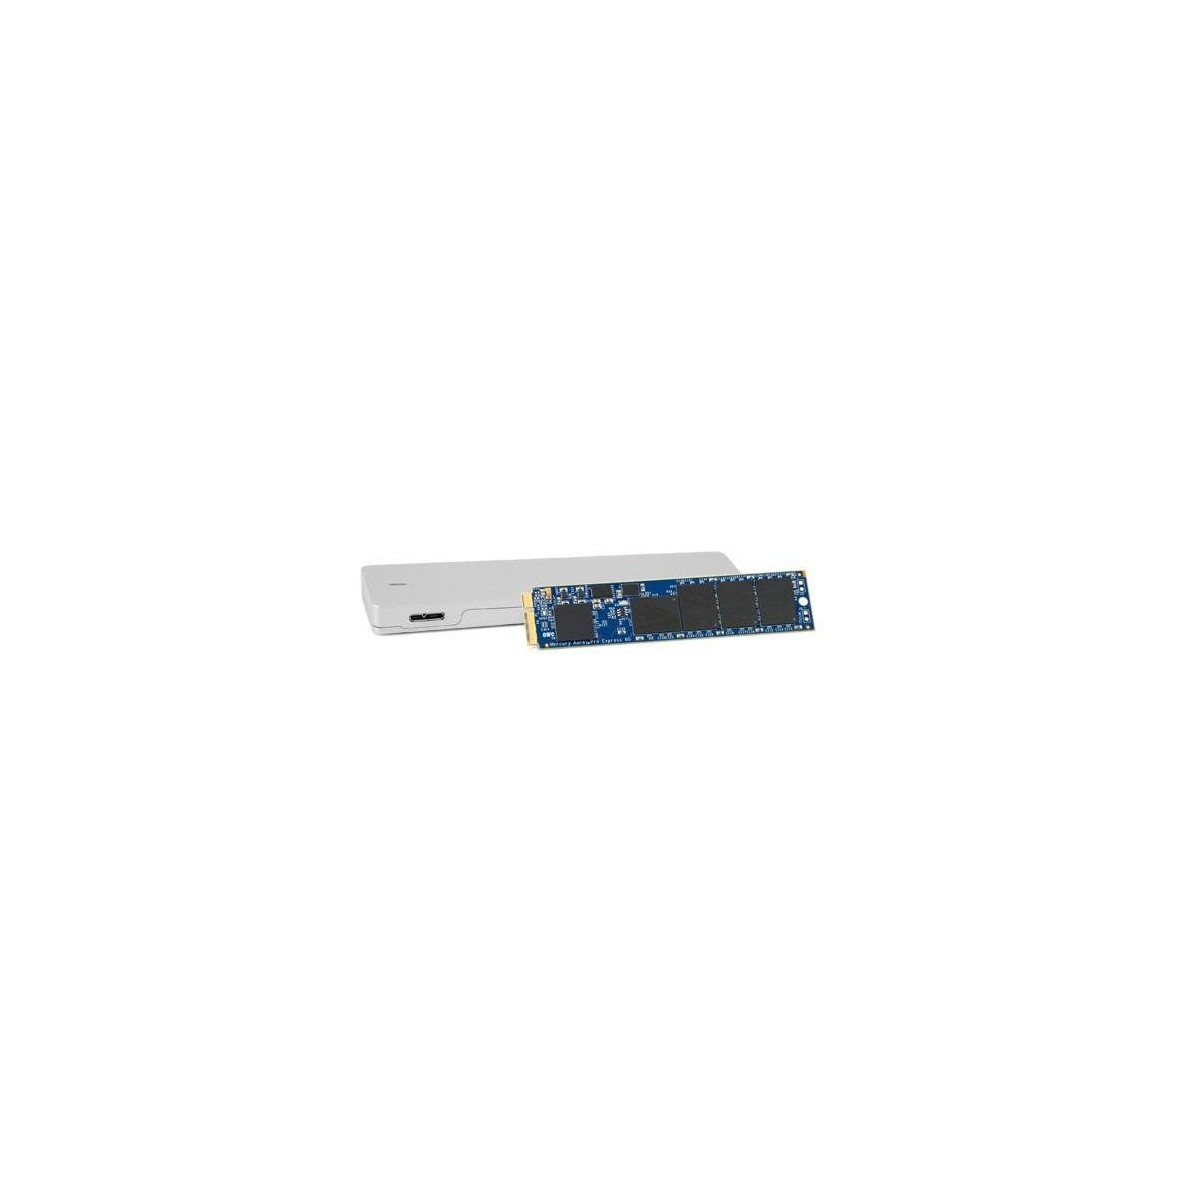 OWC SSD 1TB 530-495 APro6G Kit M.2| f?r MacBook Air 2010-2011 - Solid State Disk - 1,000 GB